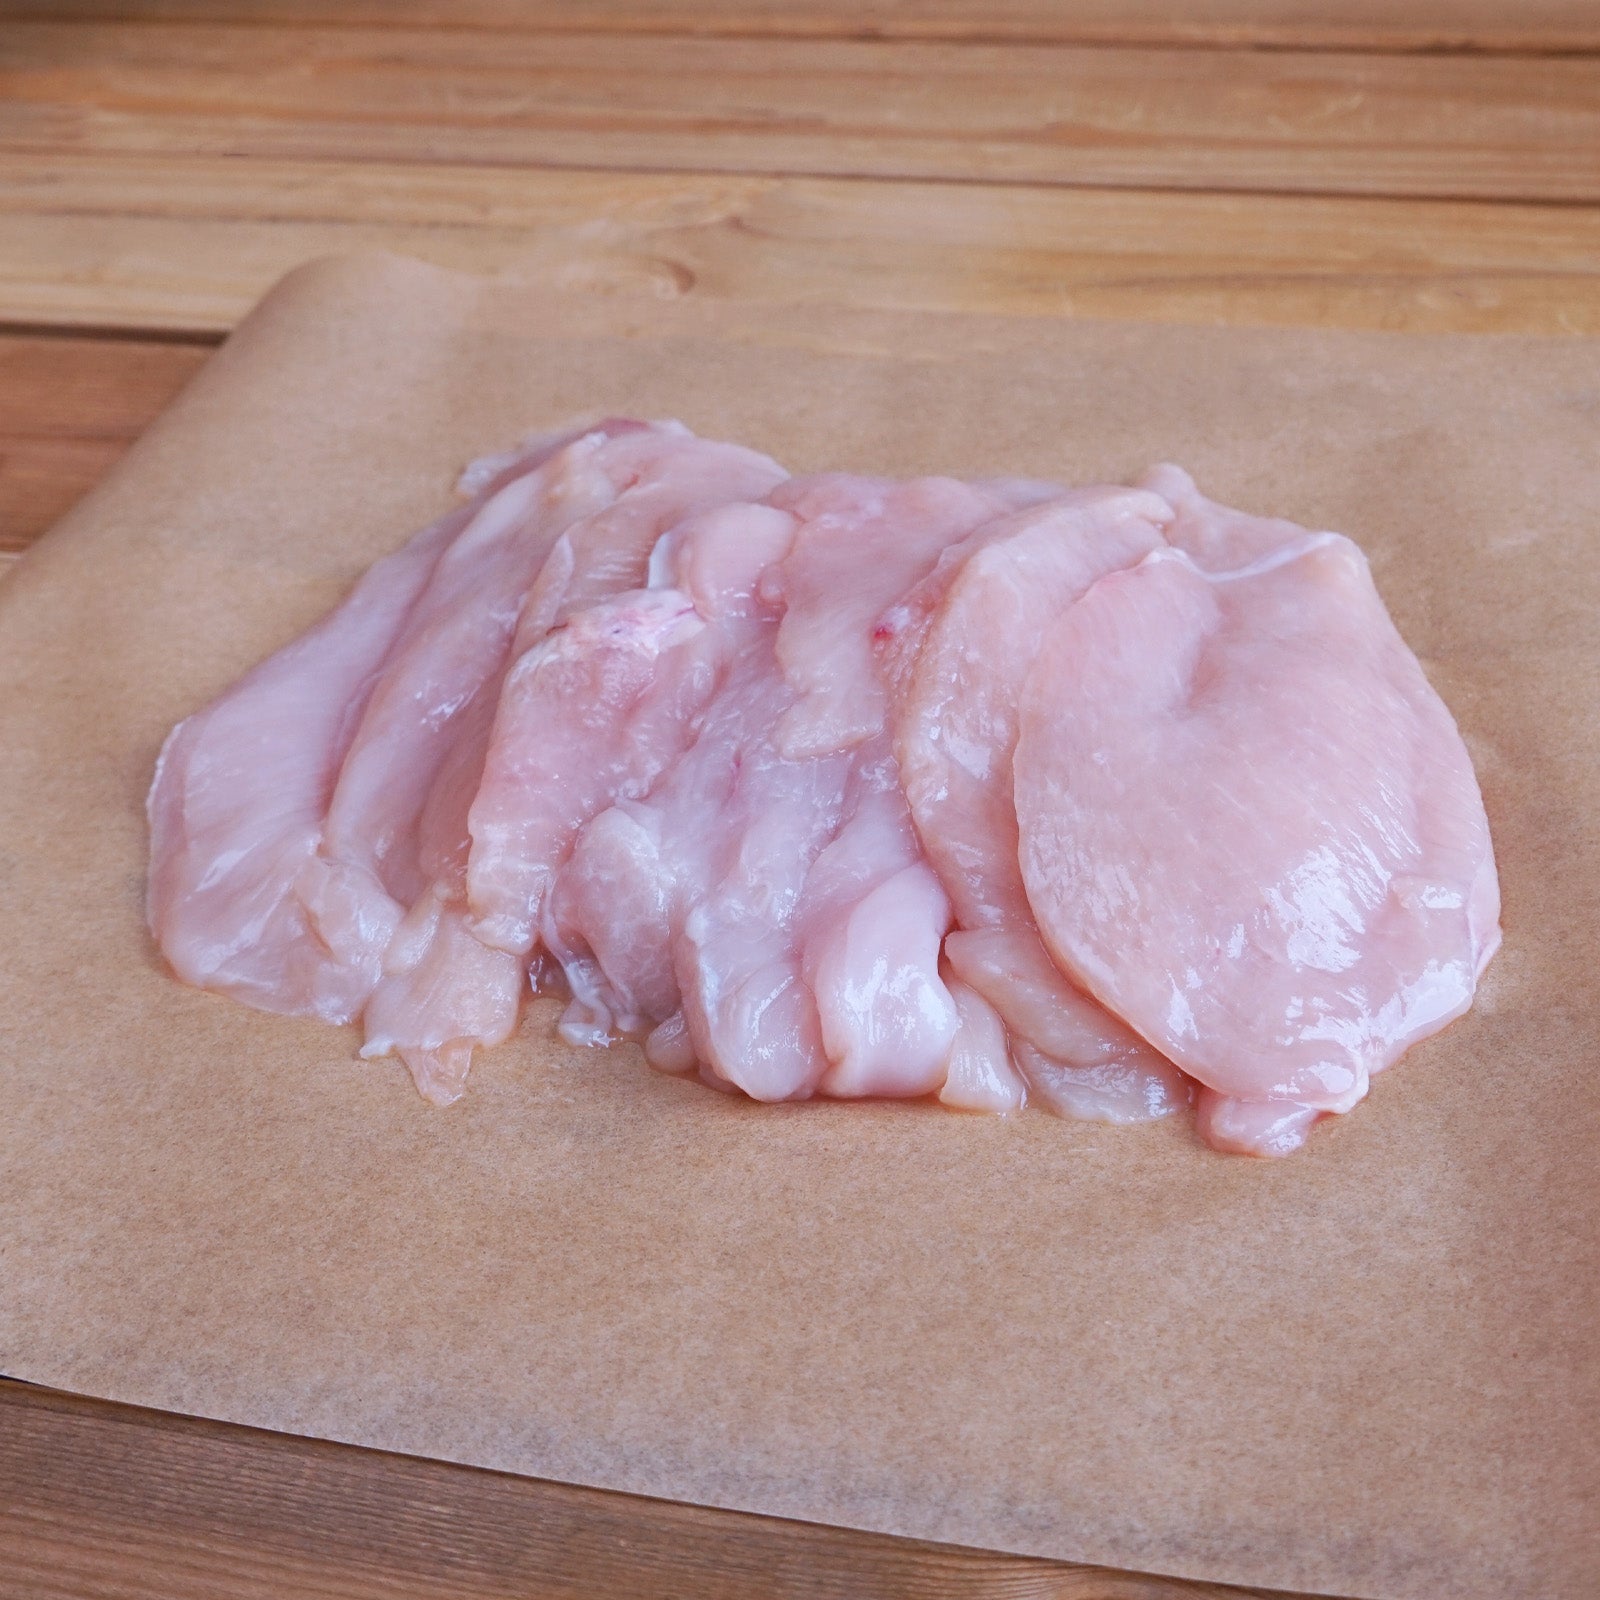 New Zealand Certified Organic Free-Range Chicken Breast 10mm Slices (500g) - Horizon Farms